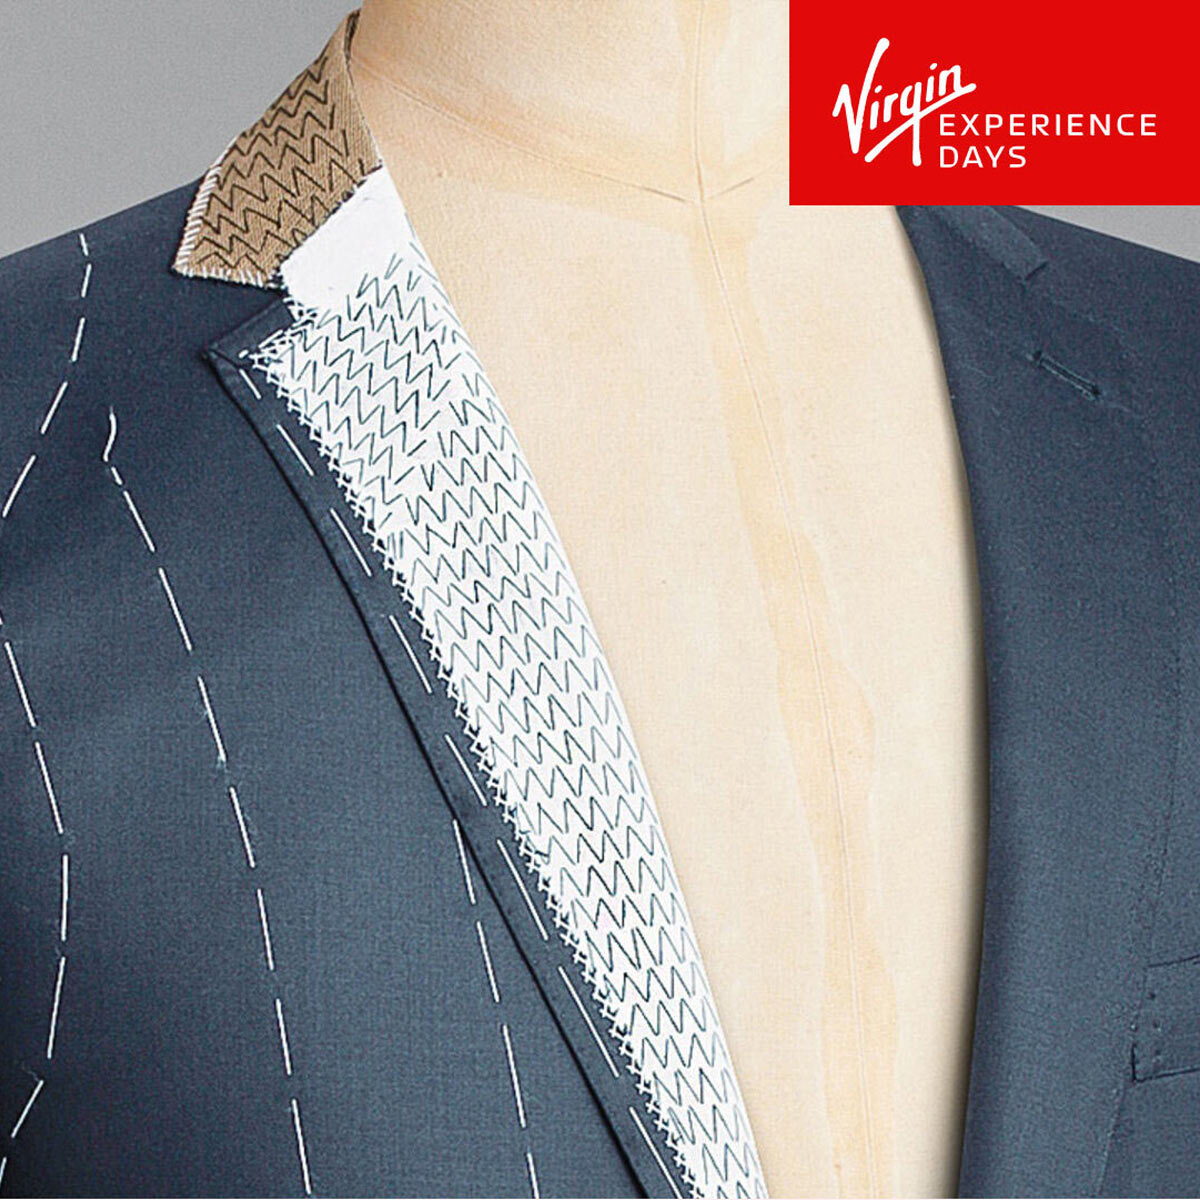 Buy Virgin Experience Premium Savile Row Tailoring Experience Image2 at Costco.co.uk